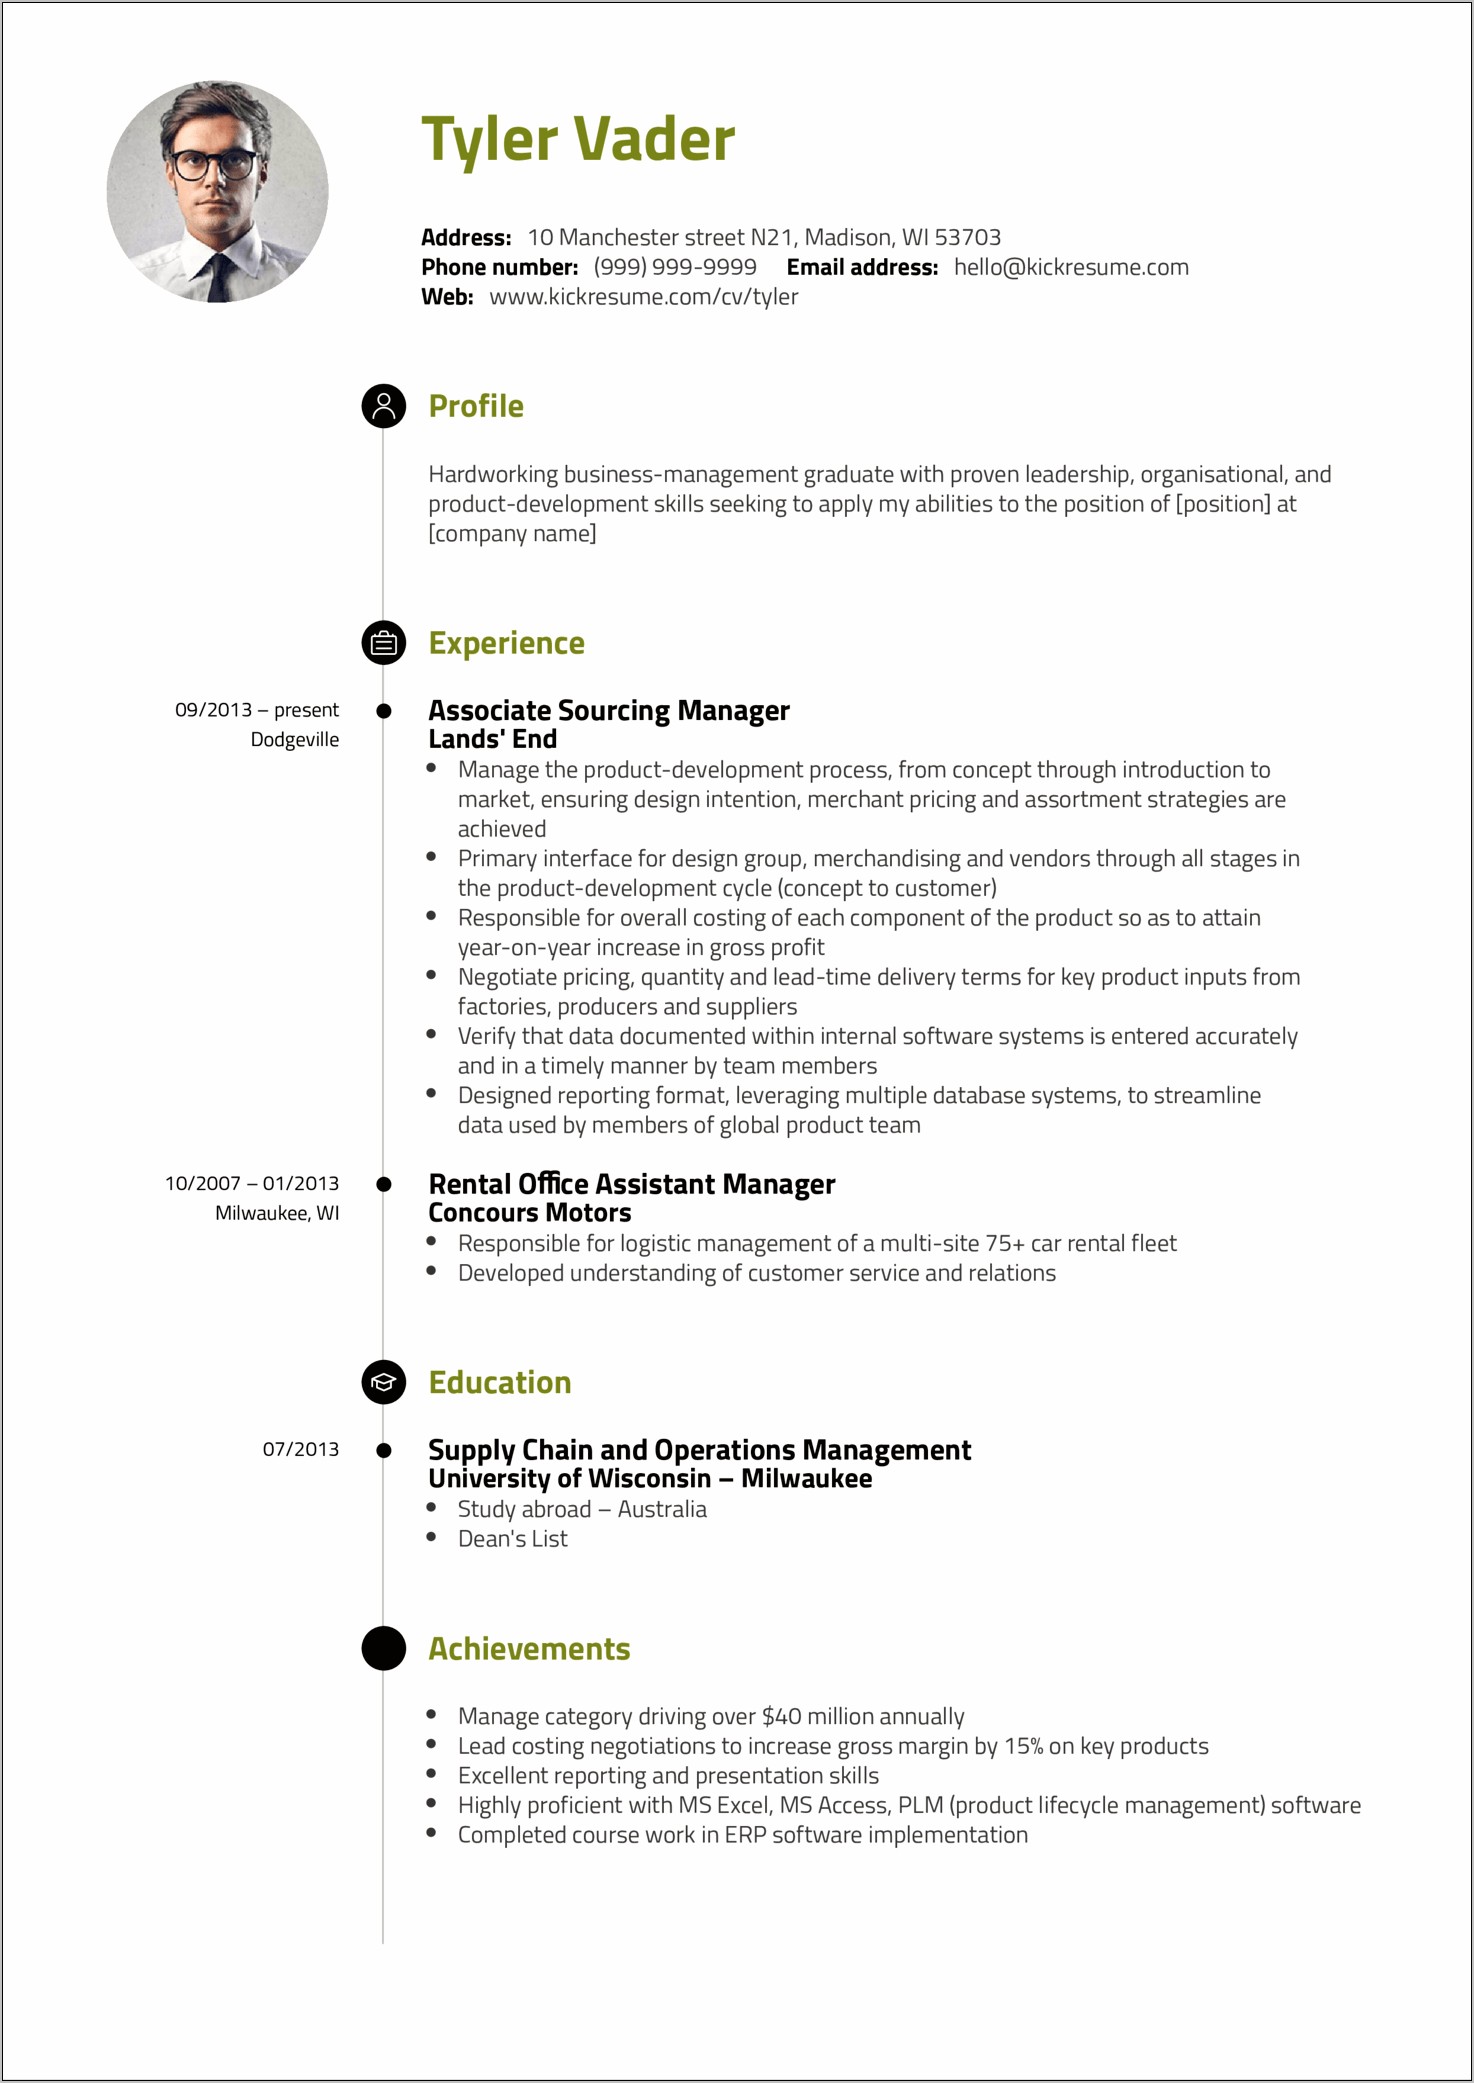 Recent Marketing Degree Graduate Executive Summary For Resume